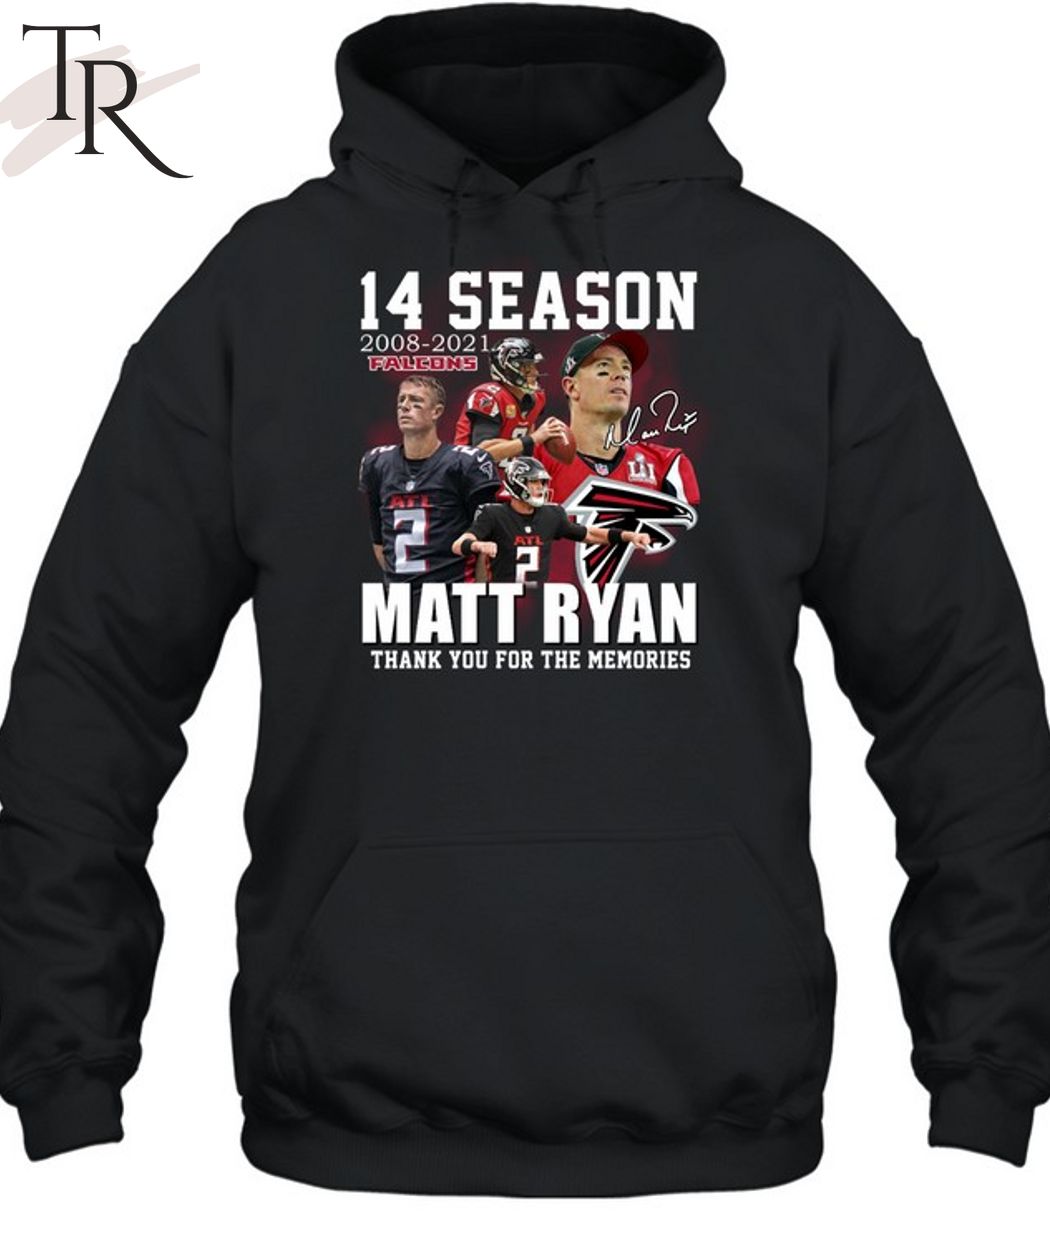 14 Season 2008-2021 Falcons Matt Ryan Thank You For The Memories T-Shirt